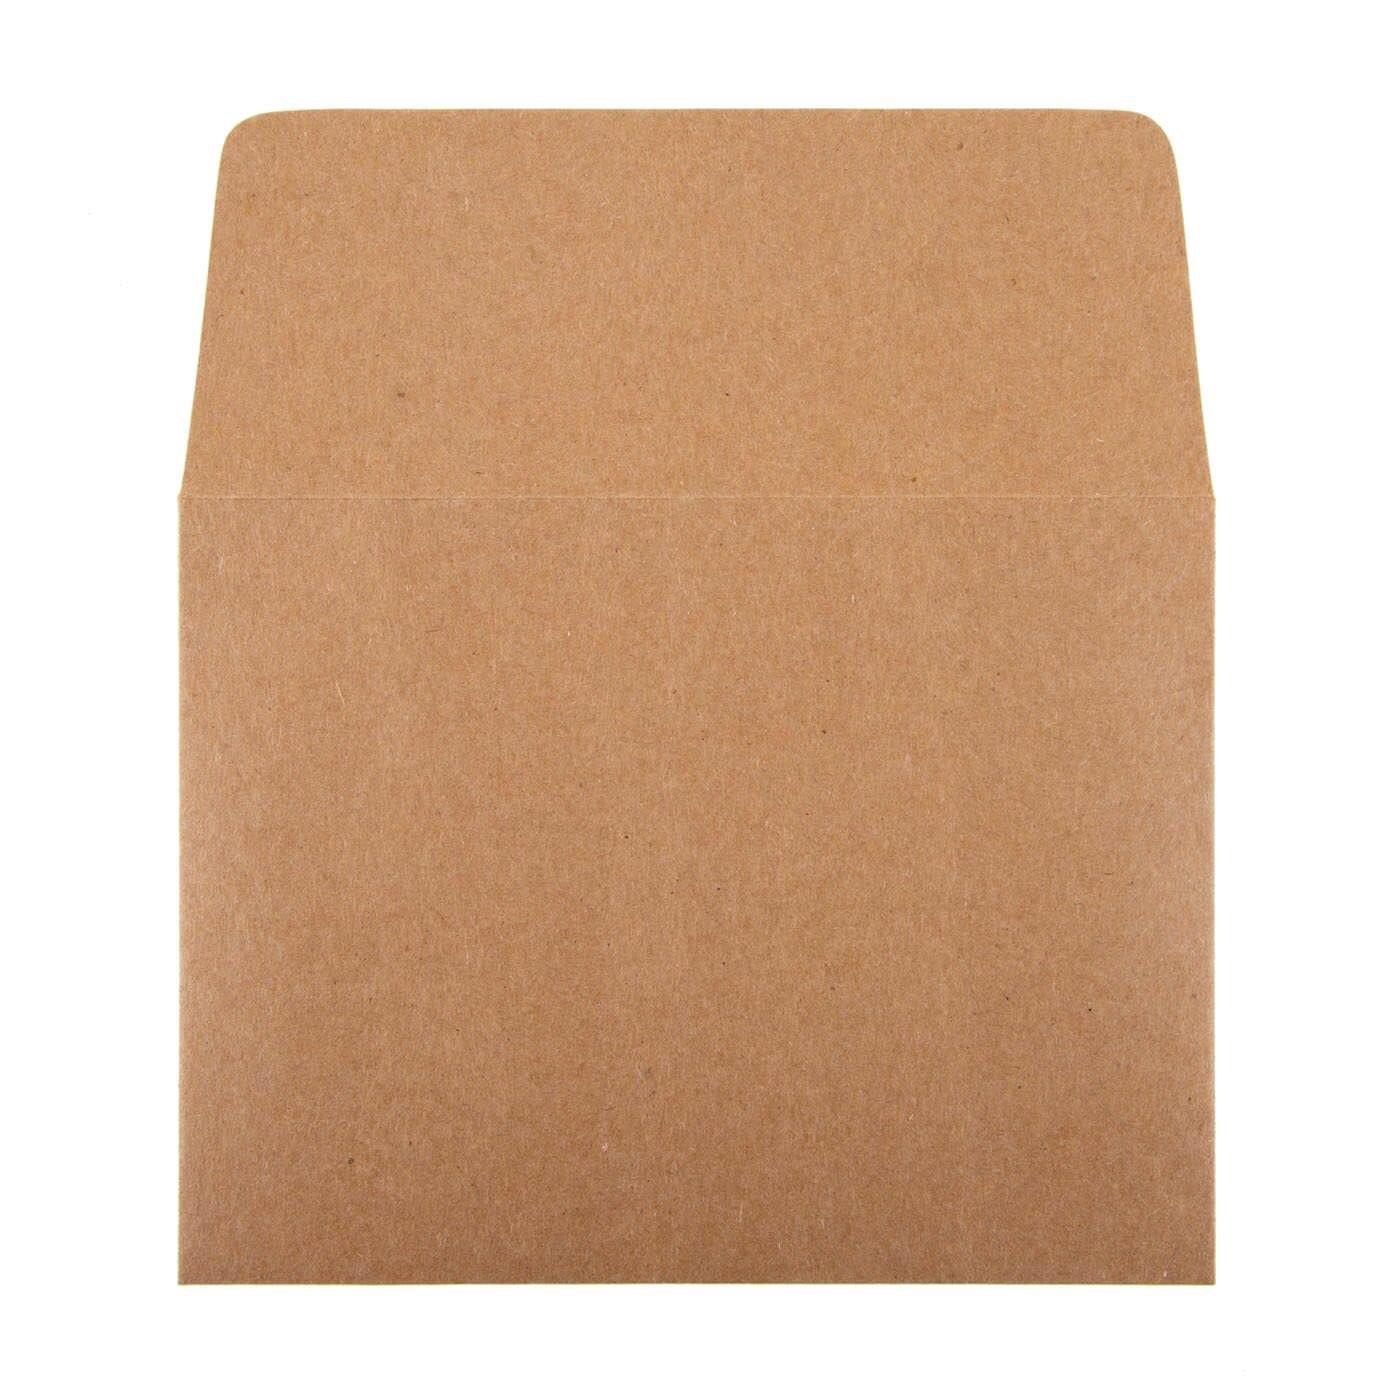 image of brown kraft paper card envelope